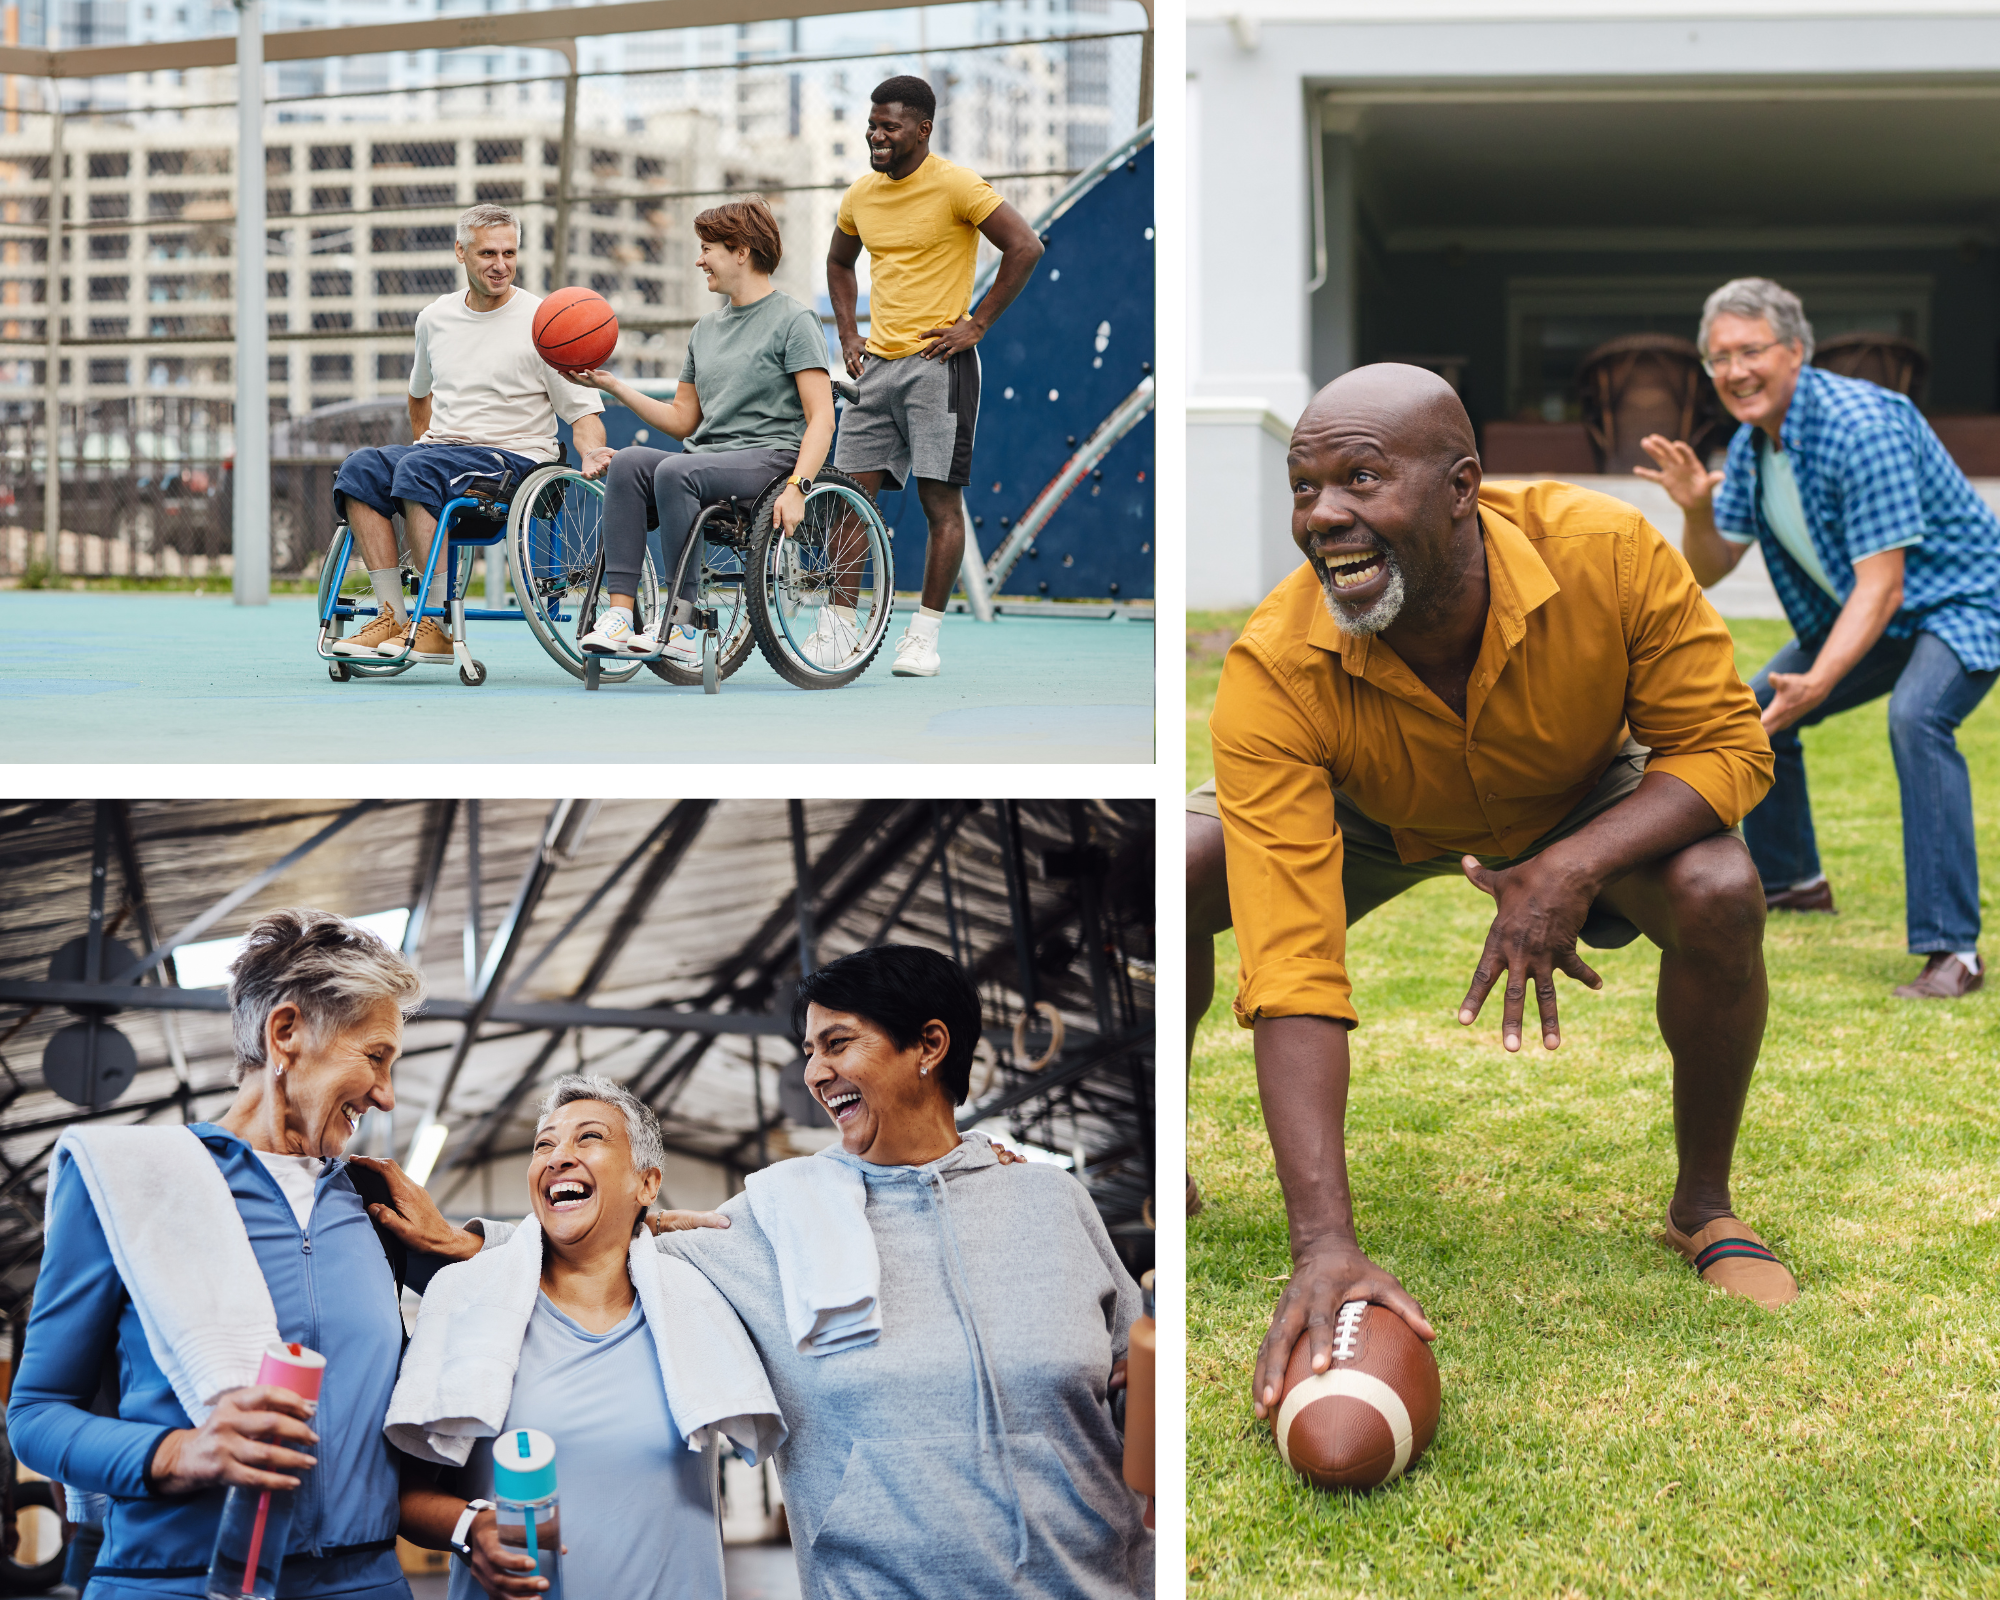 Recreational Sports as Fitness for Seniors